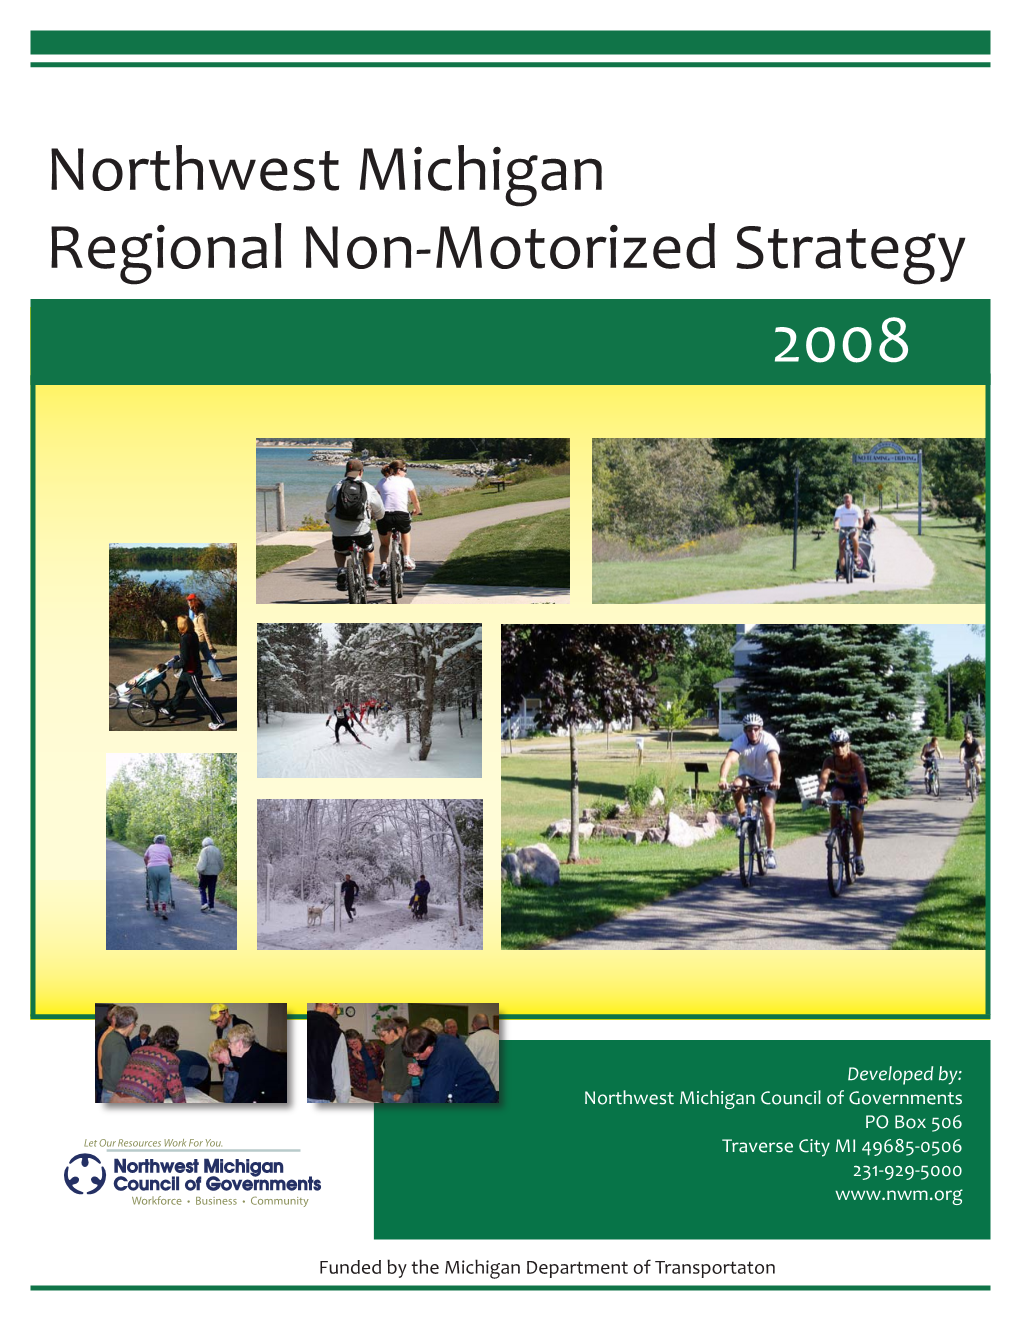 Northwest Michigan Regional Non-Motorized Strategy 2008